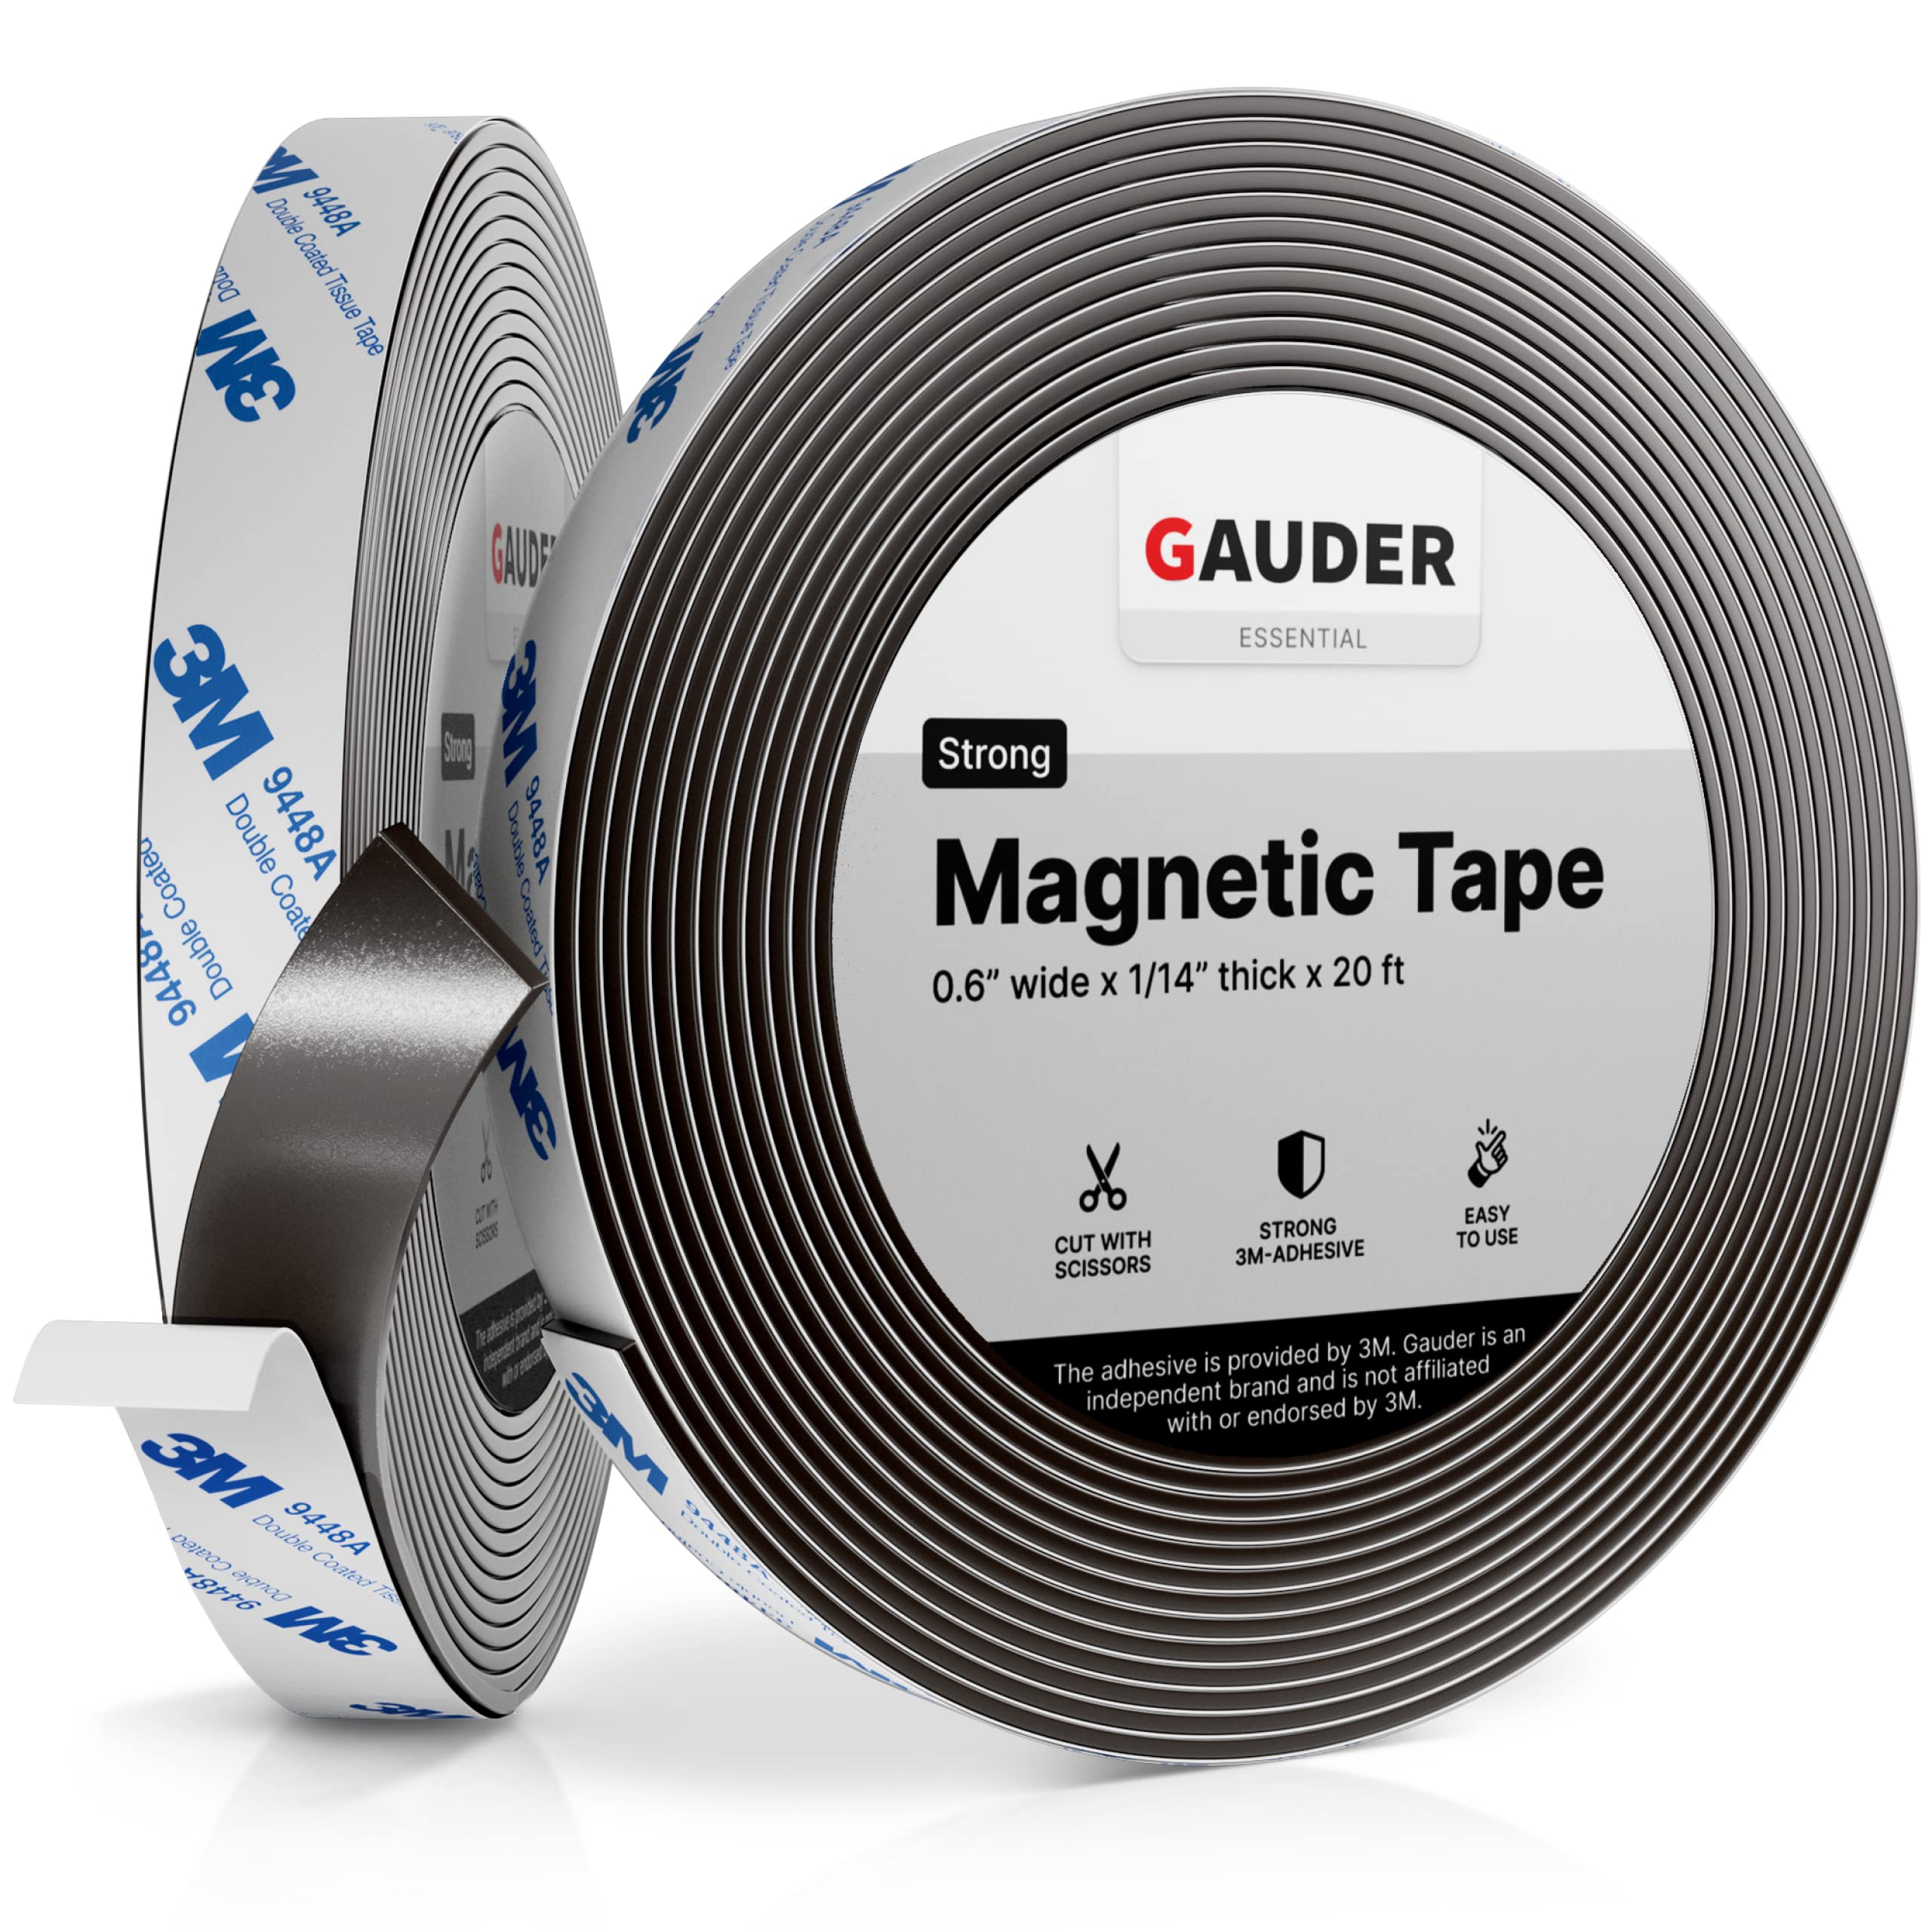 GAUDER BI-MY64-E7Y3 gAUDER Strong Magnetic Tape Self Adhesive (20